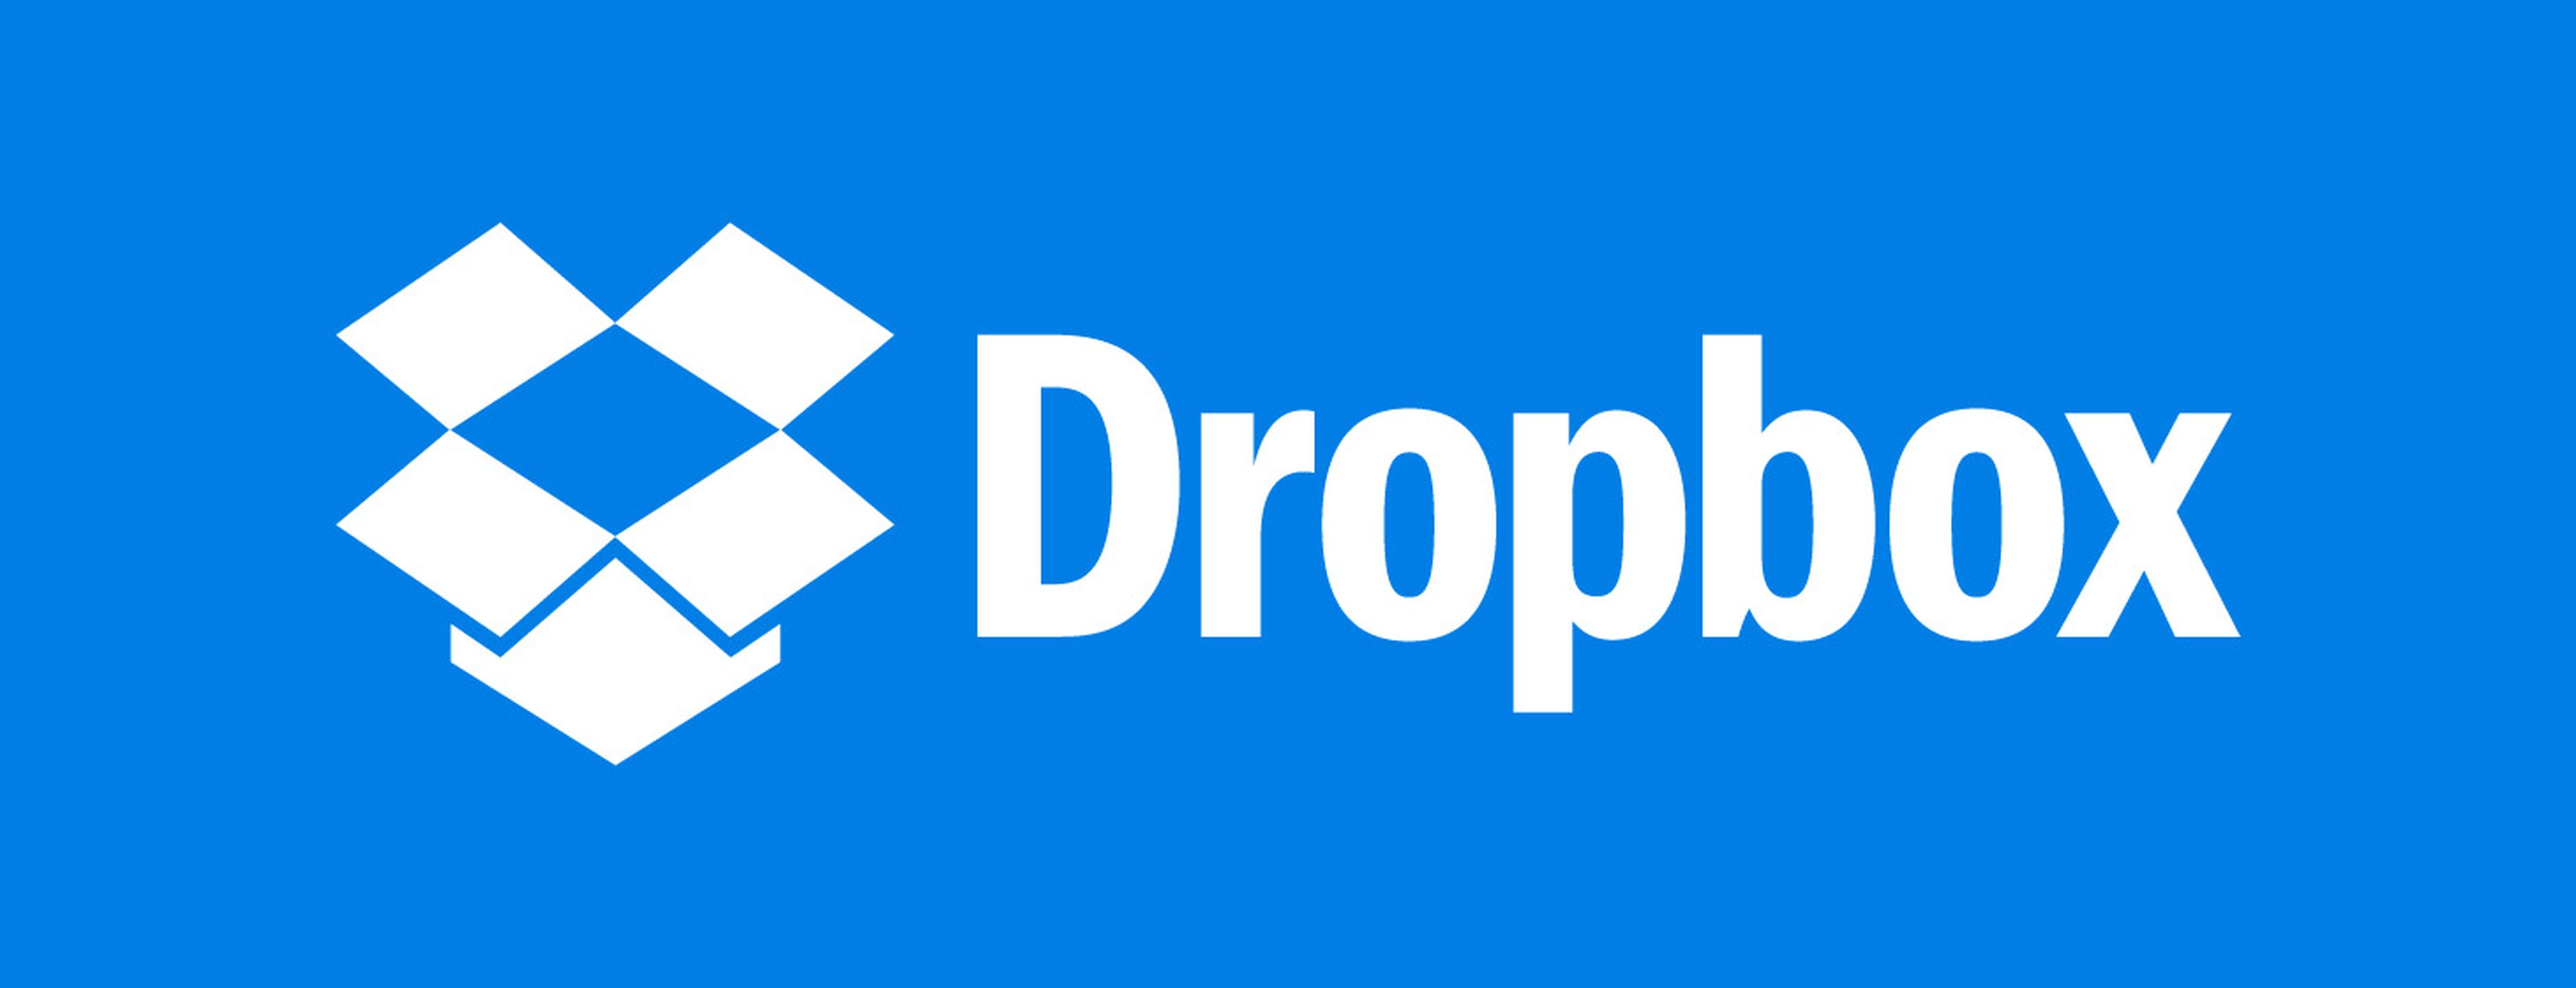 Dropbox pirateado